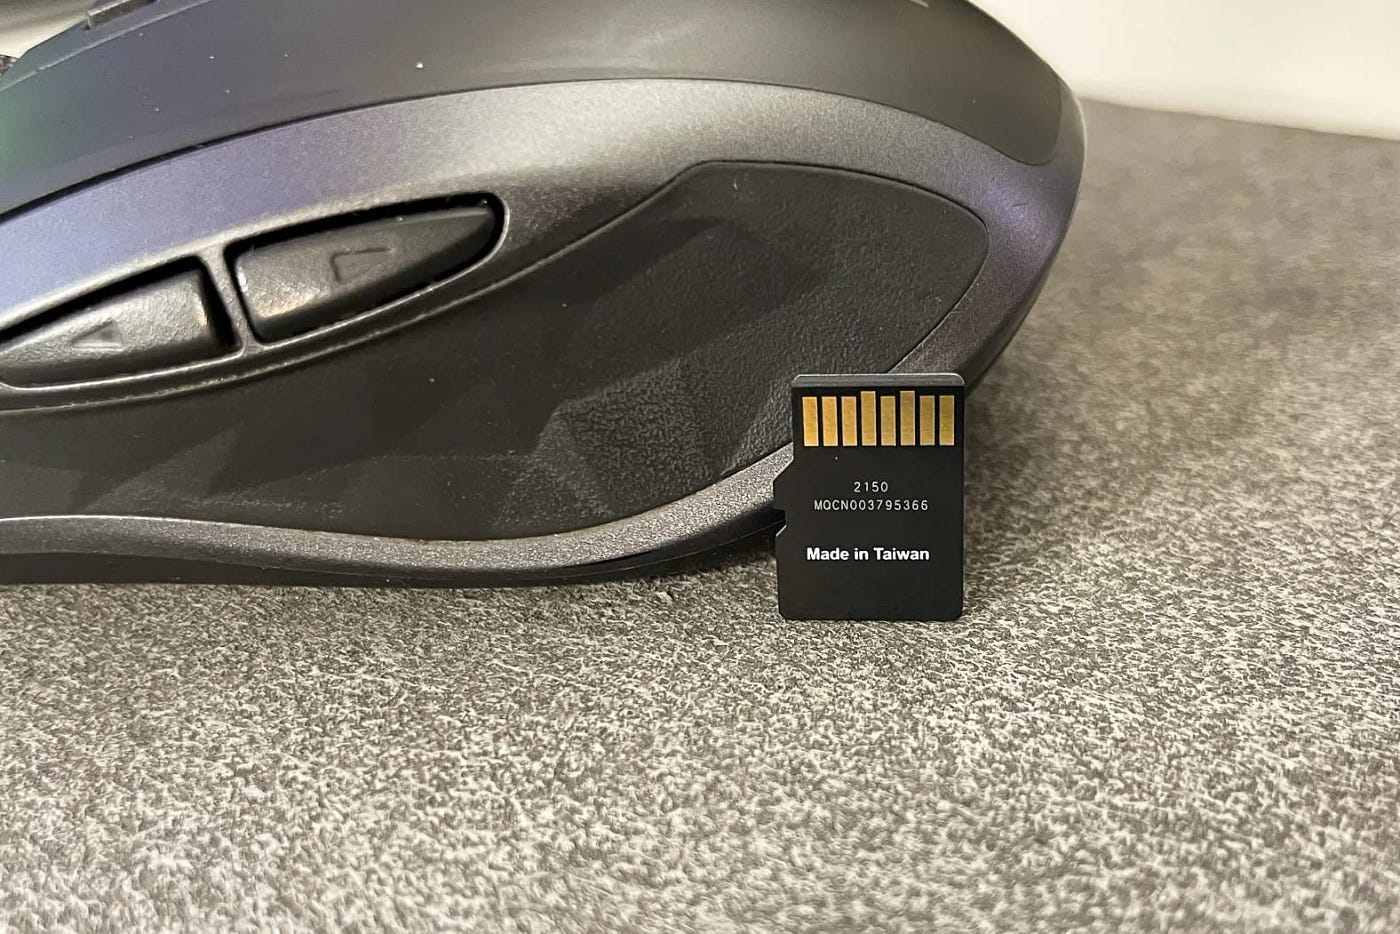 XLR8 Gaming Class 10 U3 V30 microSD Flash Memory Card